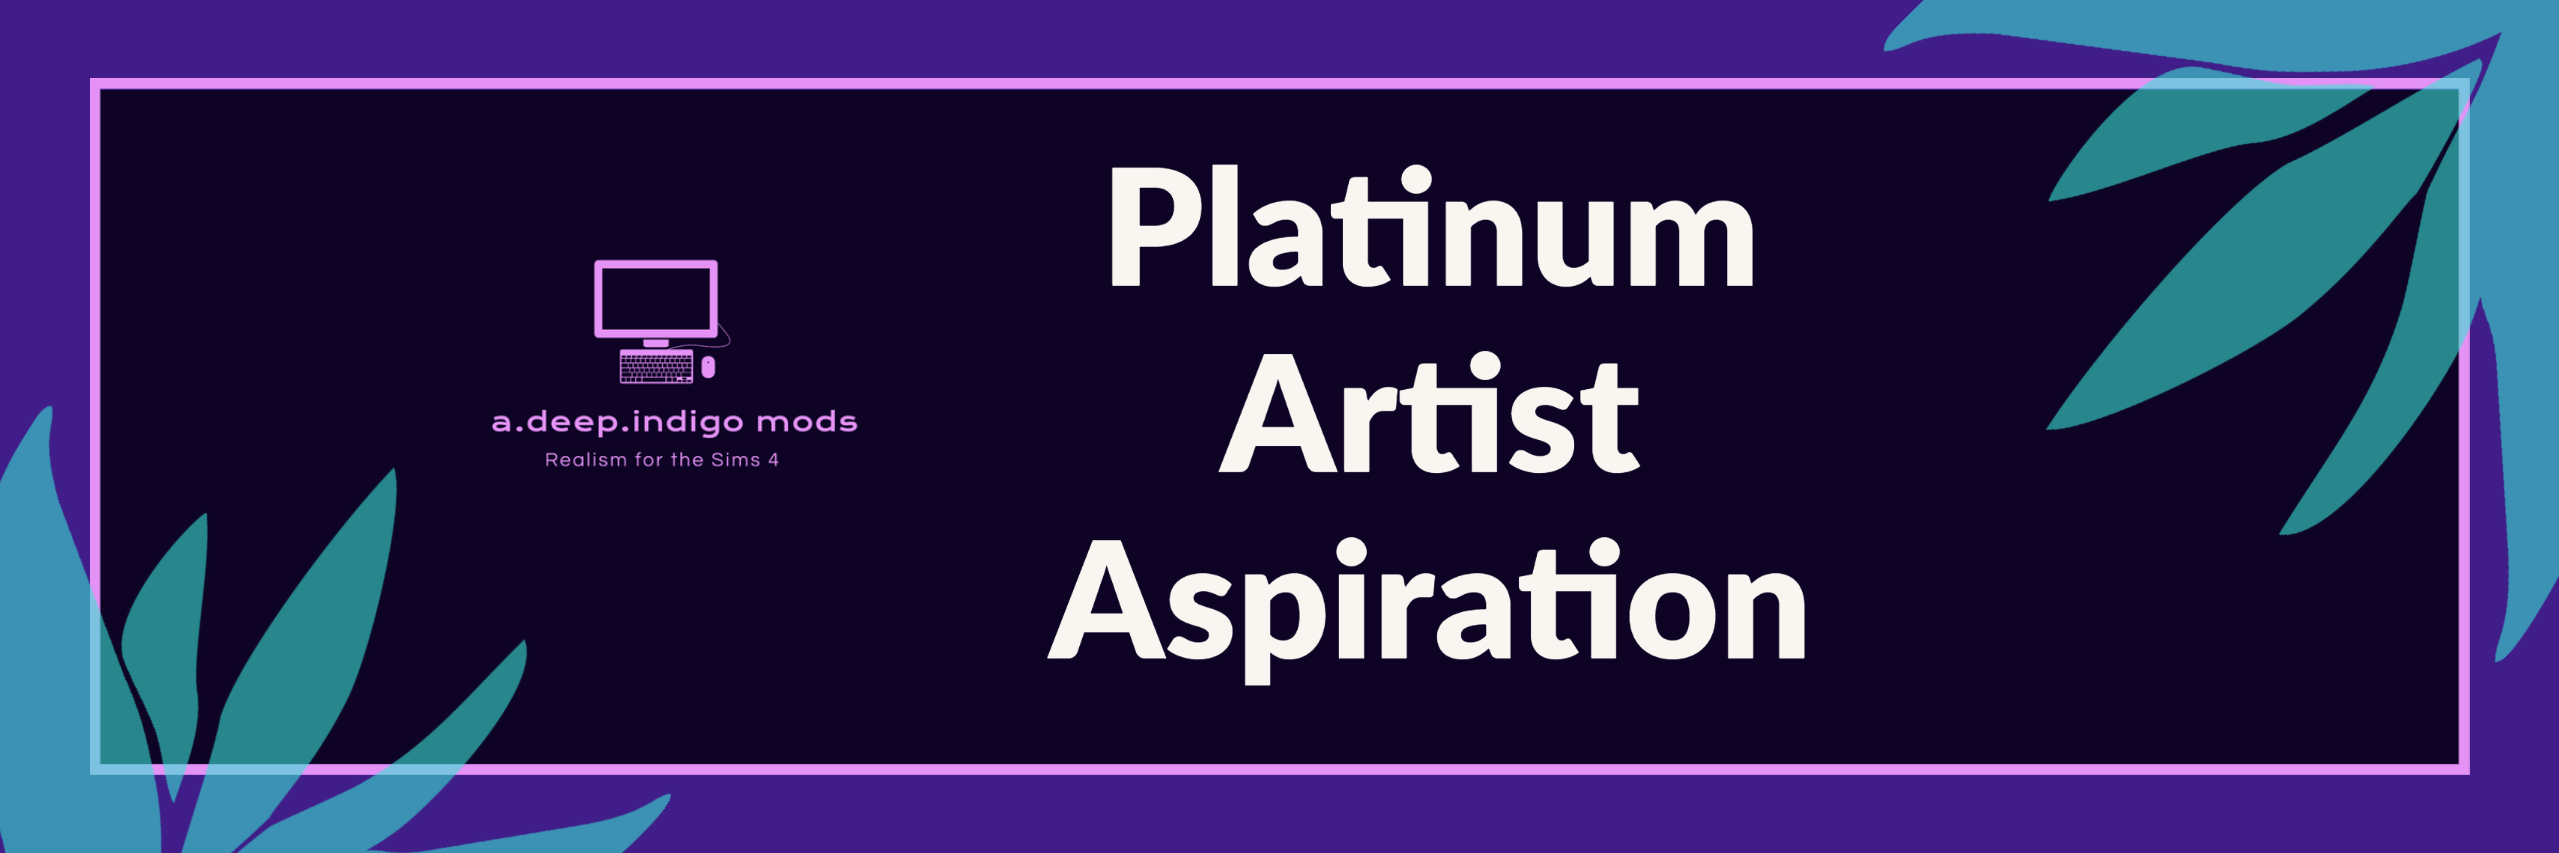 Platinum Artist Aspiration